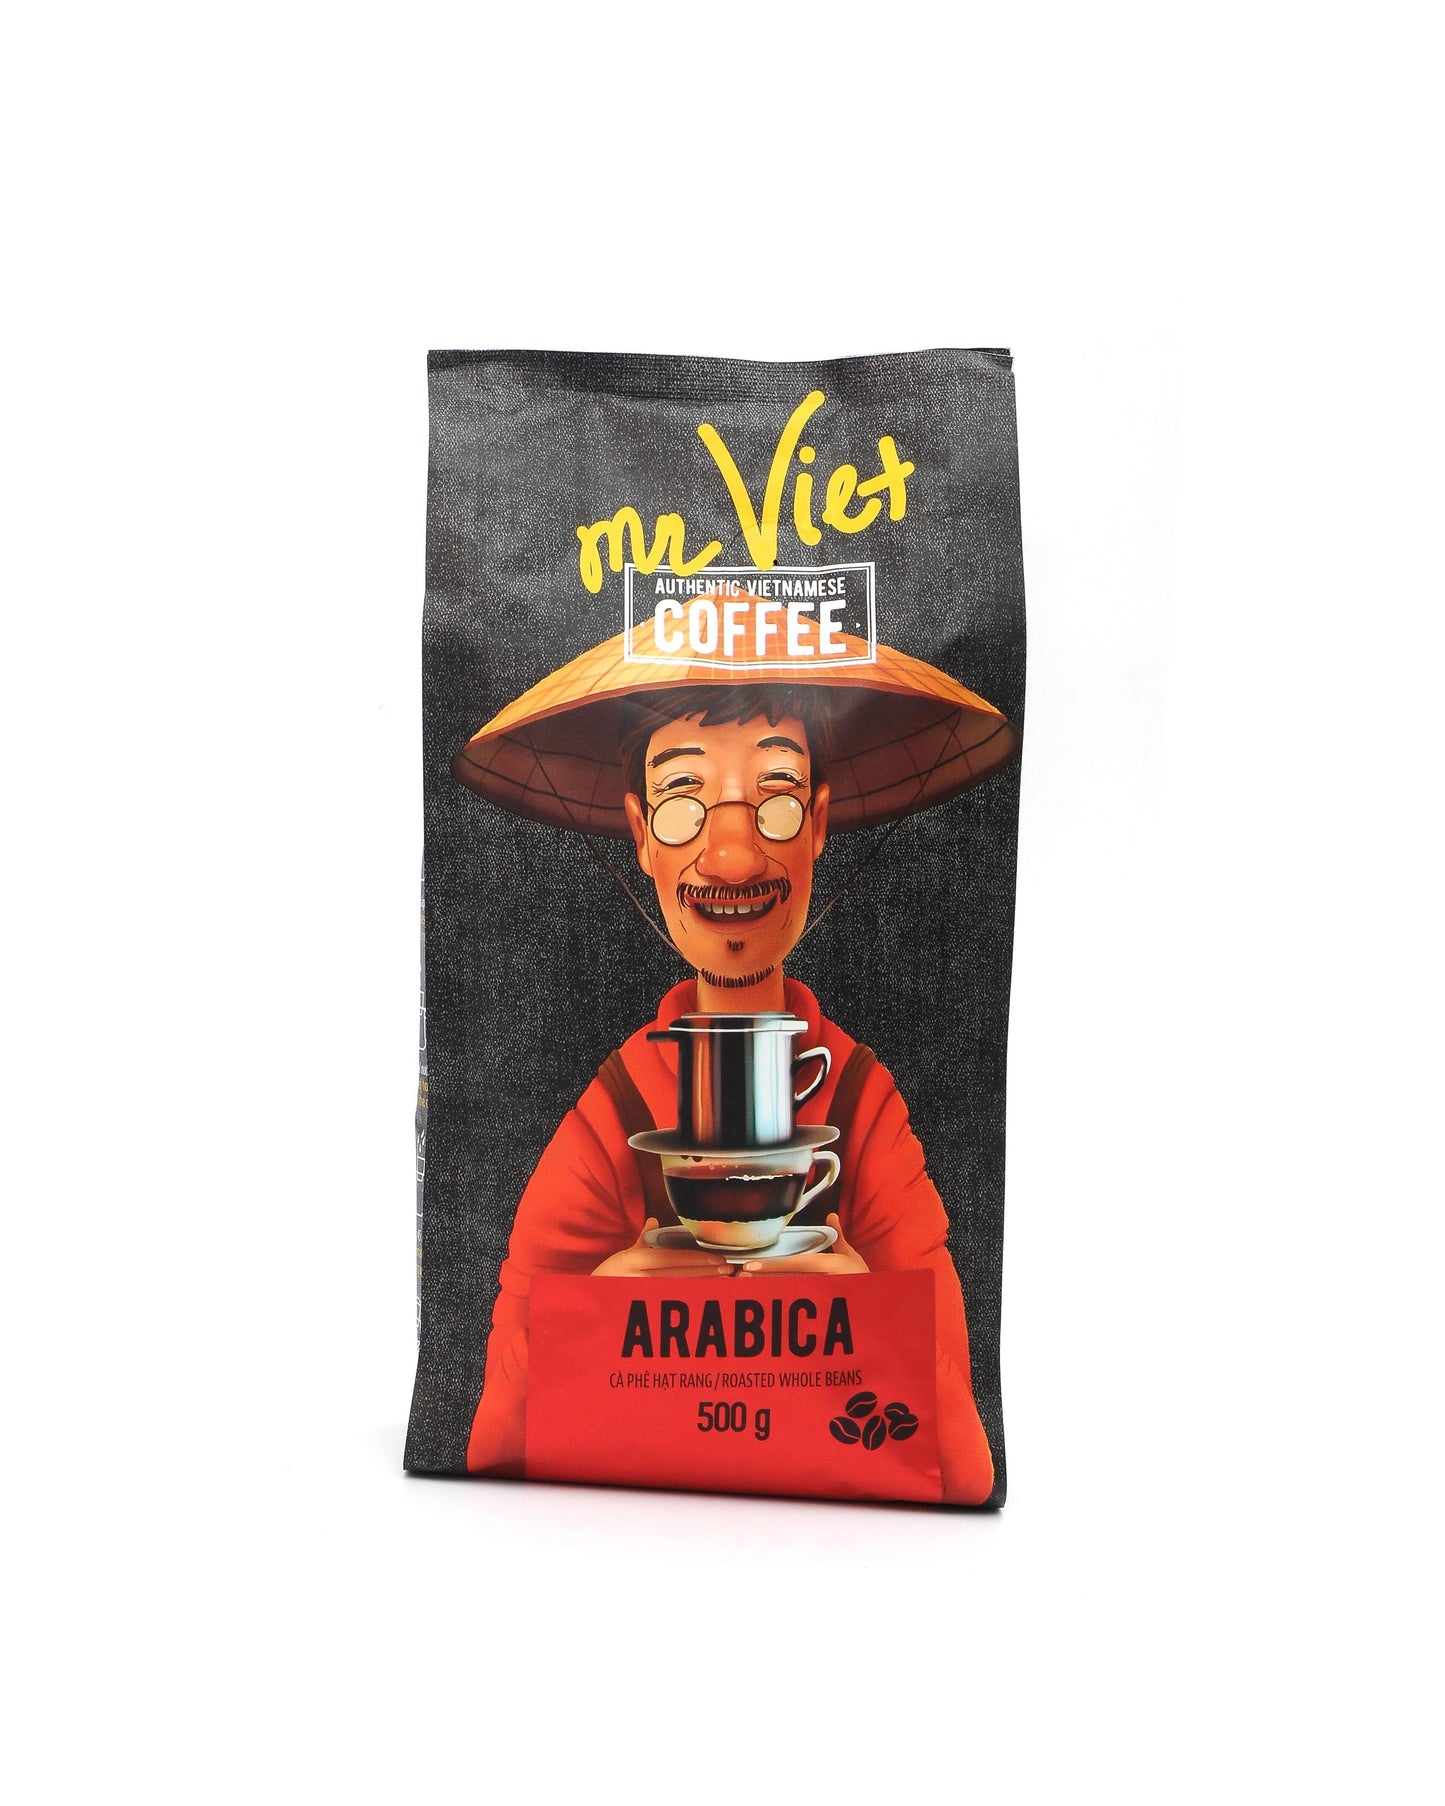 Mr. Viet Authentic Vietnamese Coffee - The Finest Vietnamese Coffee Beans